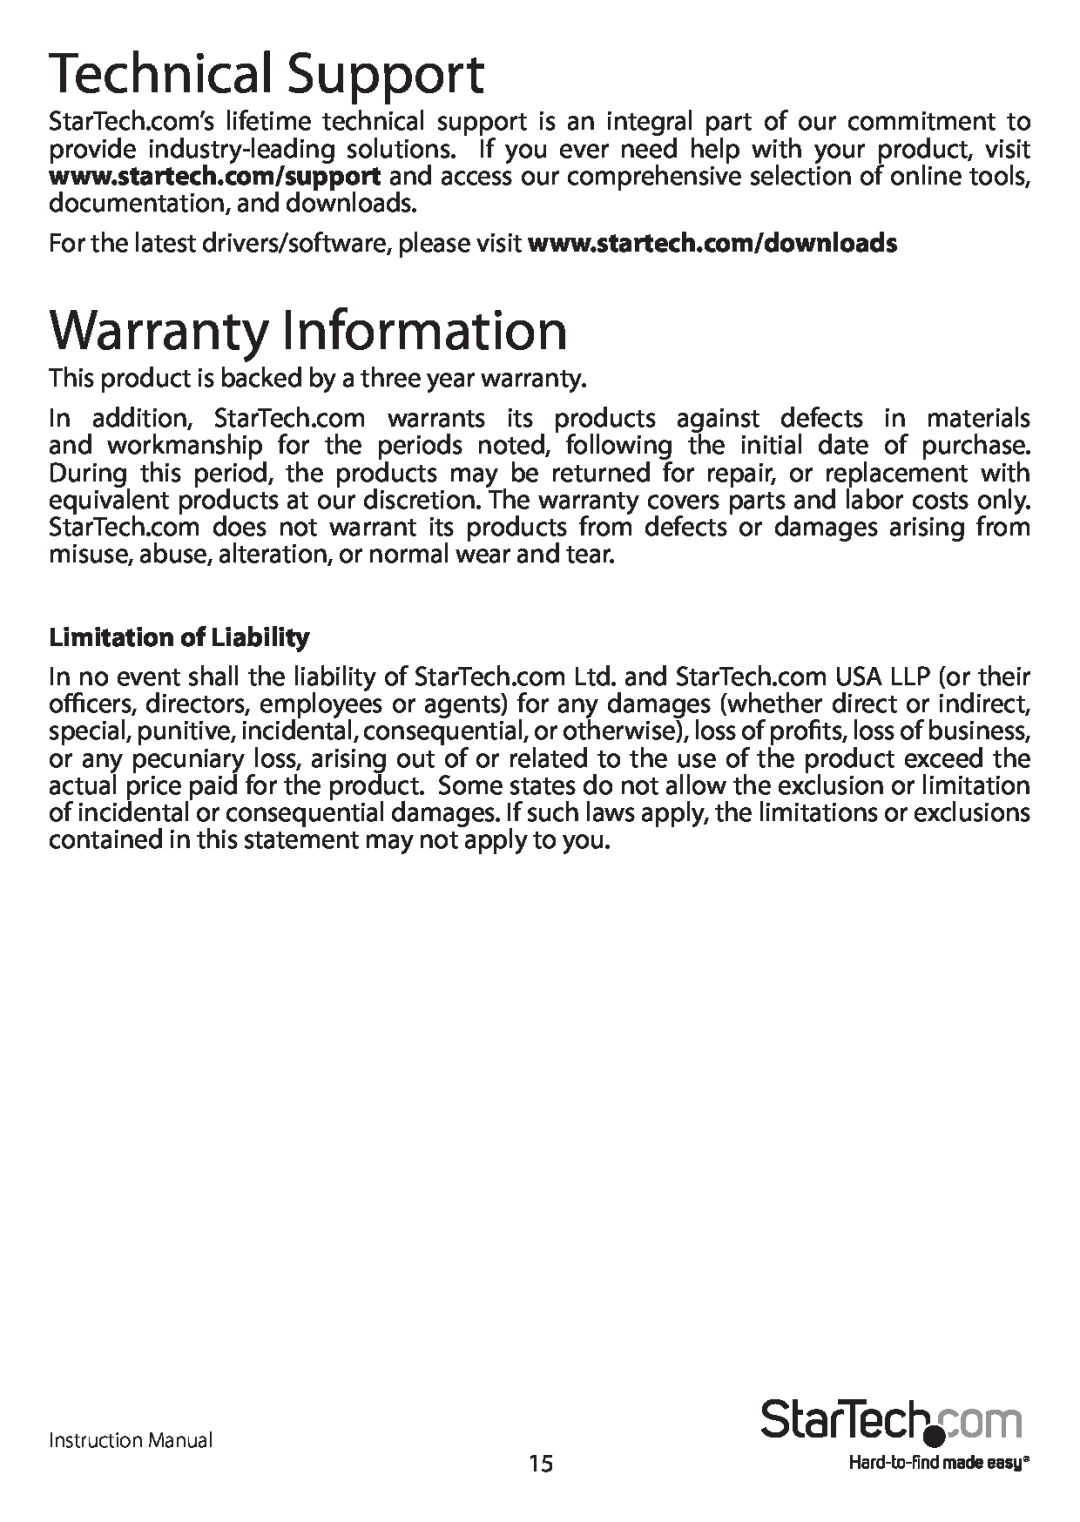 StarTech.com sv431dusb manual Technical Support, Warranty Information, Limitation of Liability 